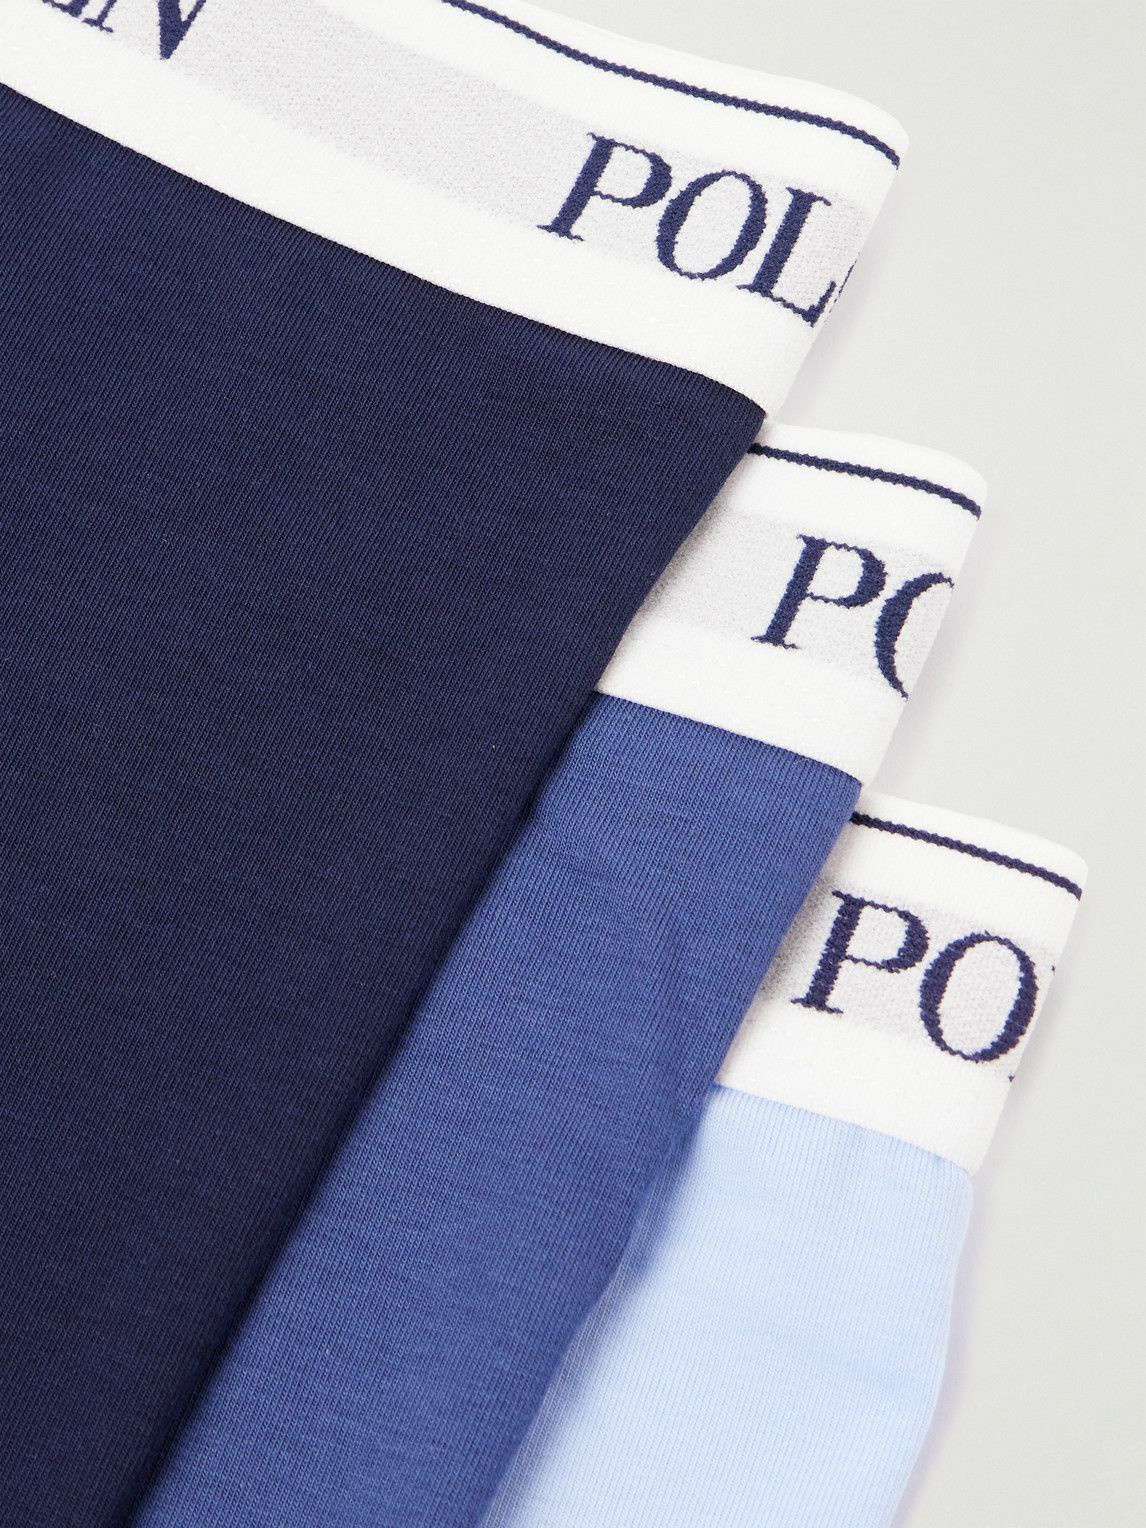 Polo Ralph Lauren CLASSIC TRUNK-3 PACK Blue